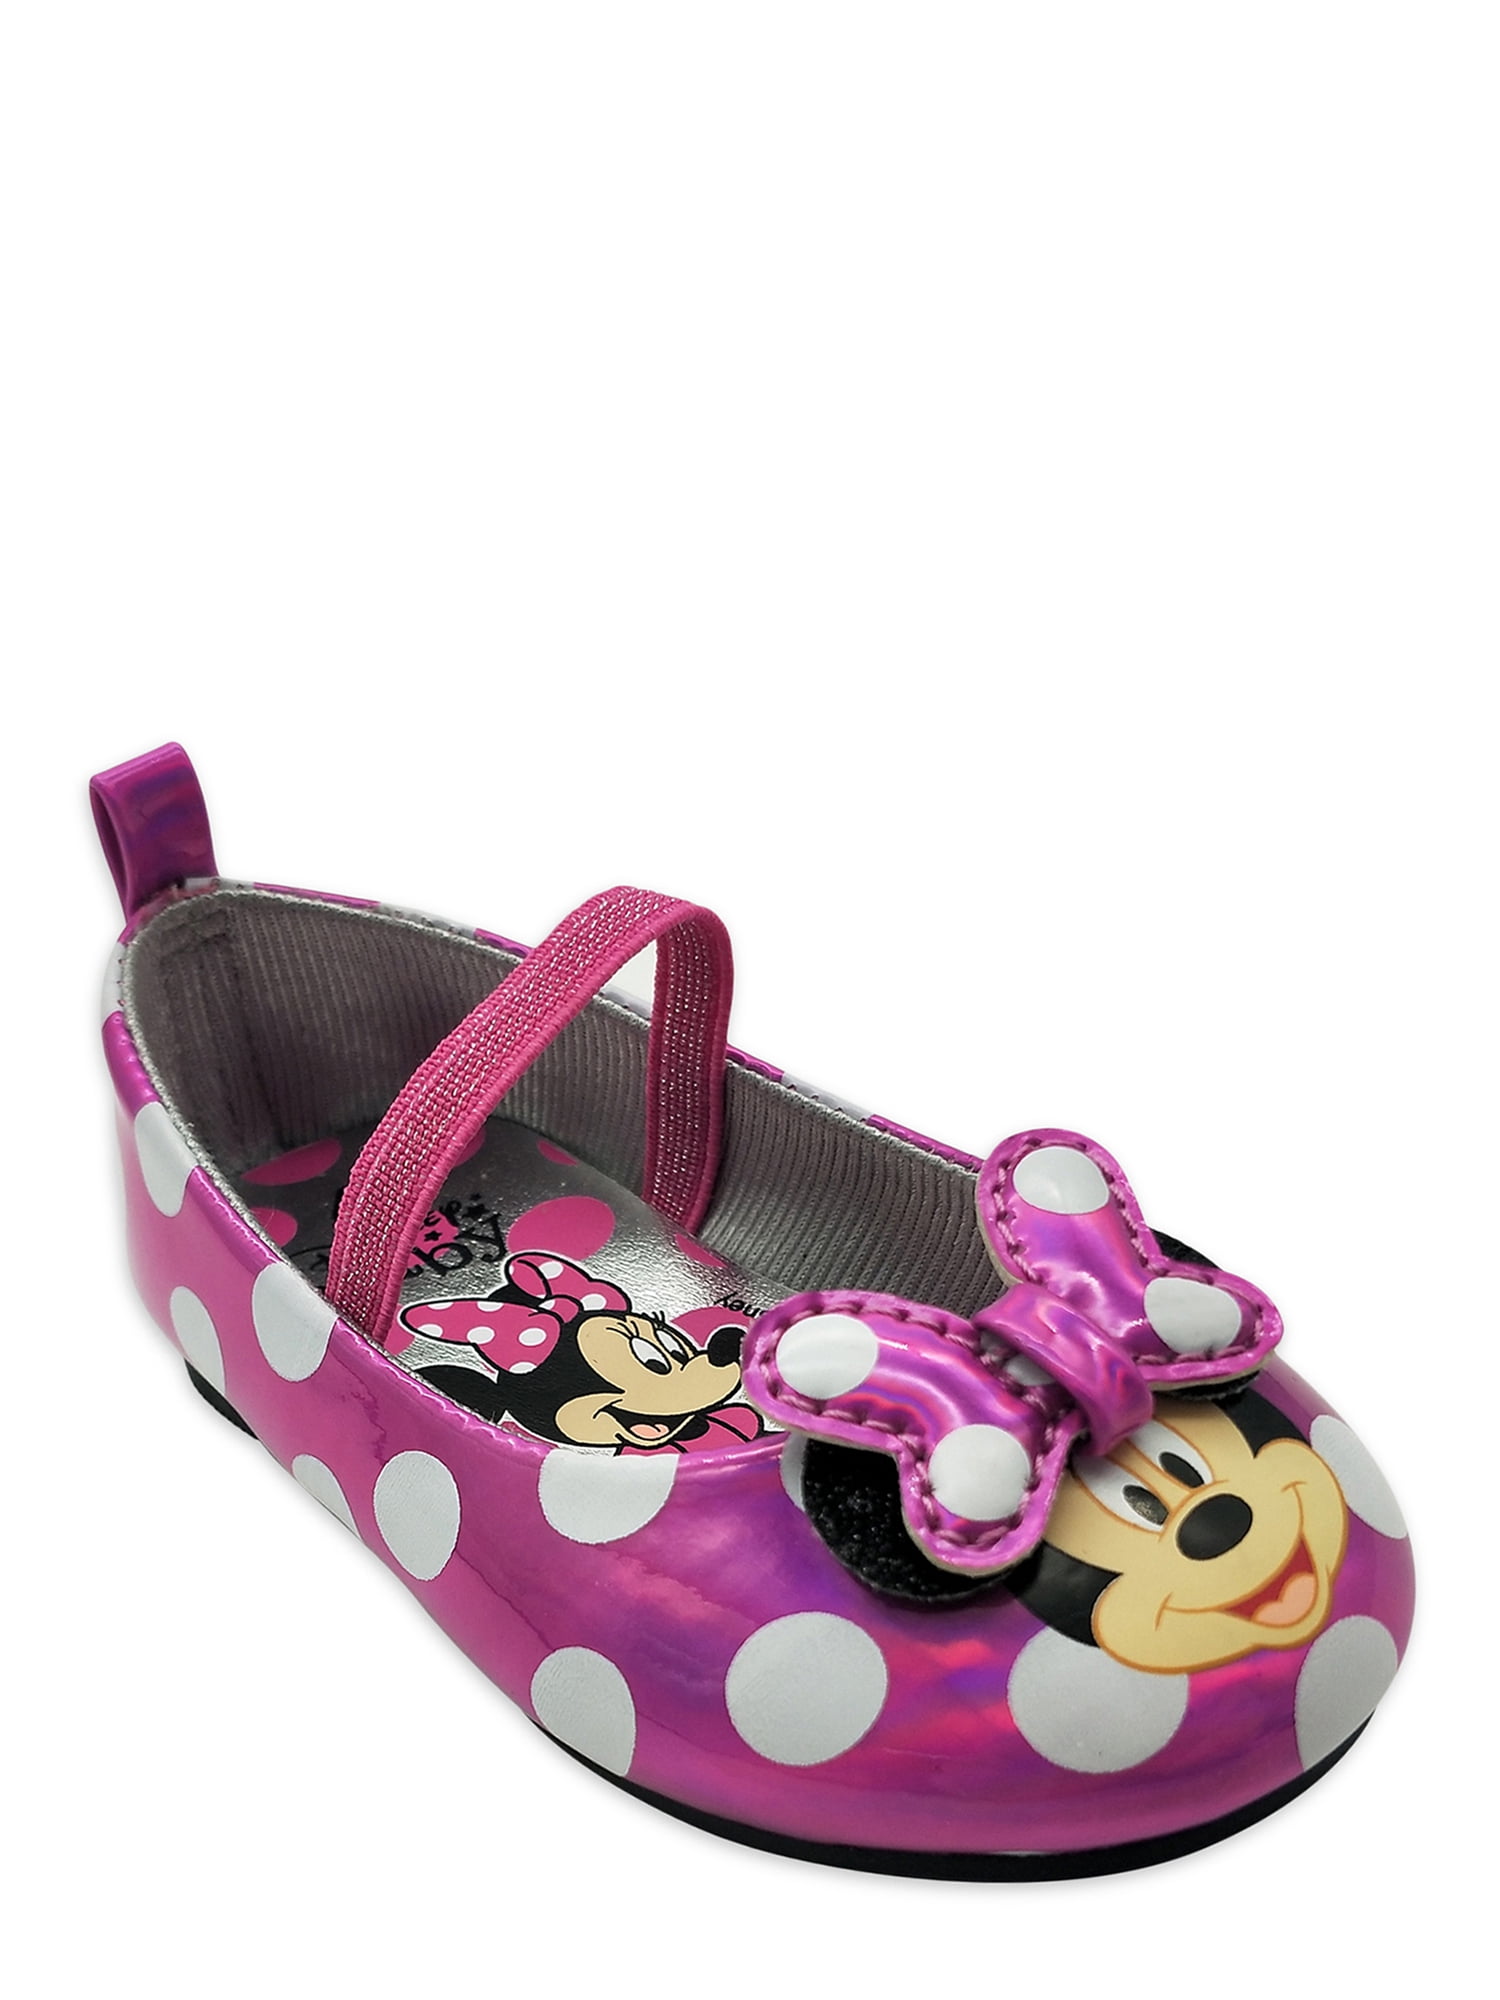 Baby Girls Disney Minnie Mouse 2.5 Tog Pink Polka Dot Sleeping Bag ~ Size 0-6m 